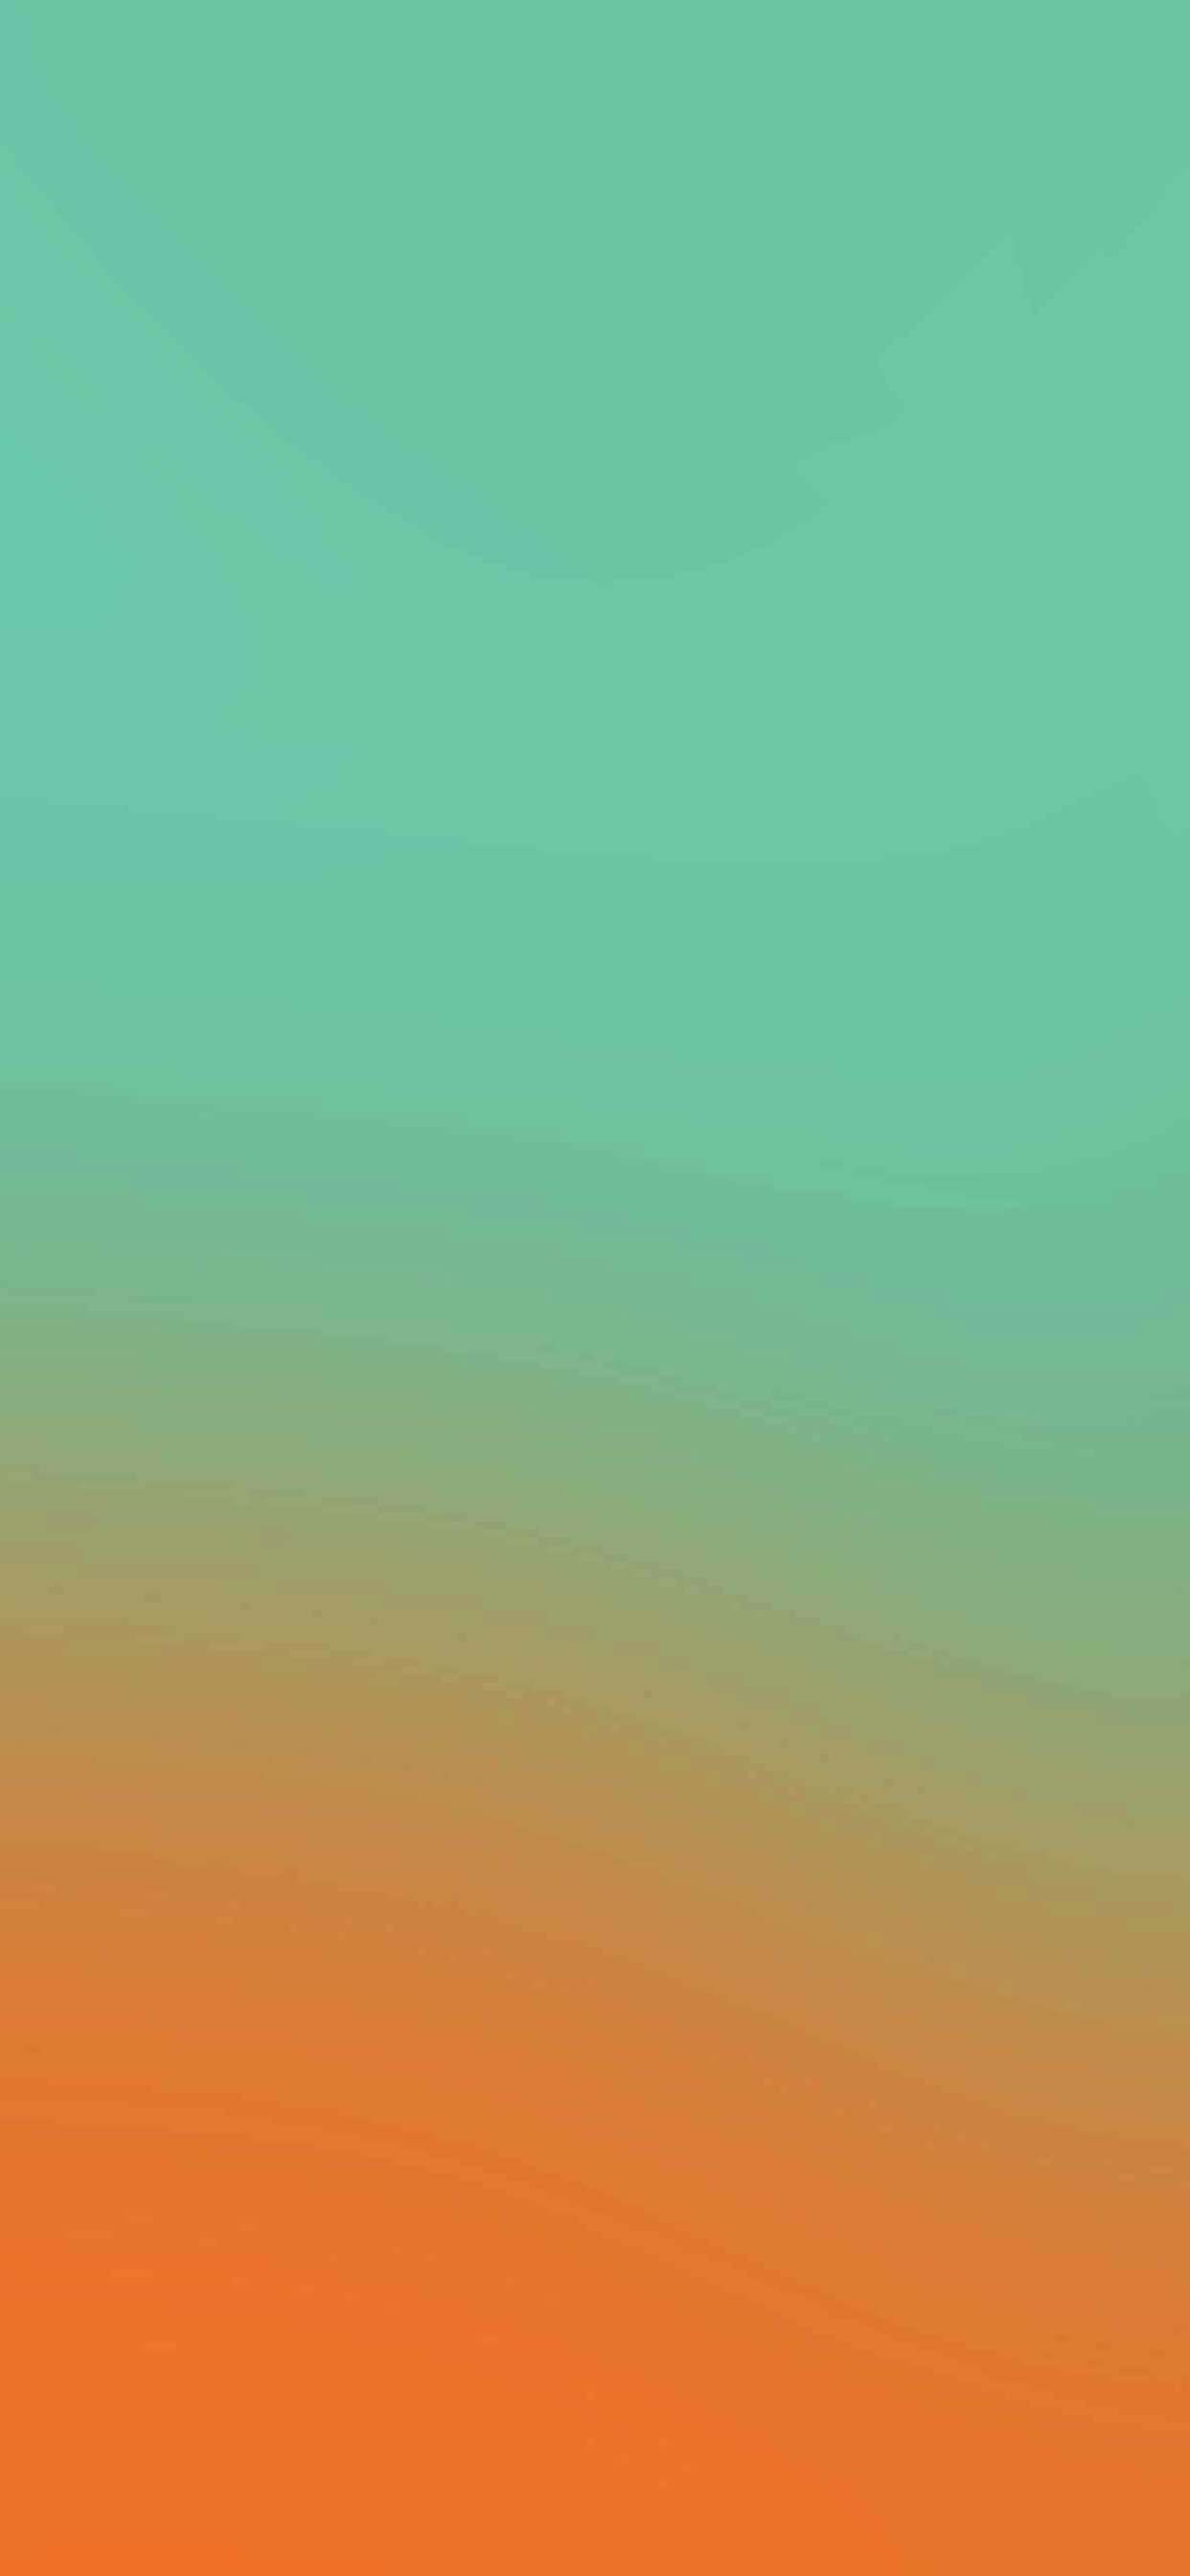 Pattern green orange. wallpaper.sc iPhone XS Max